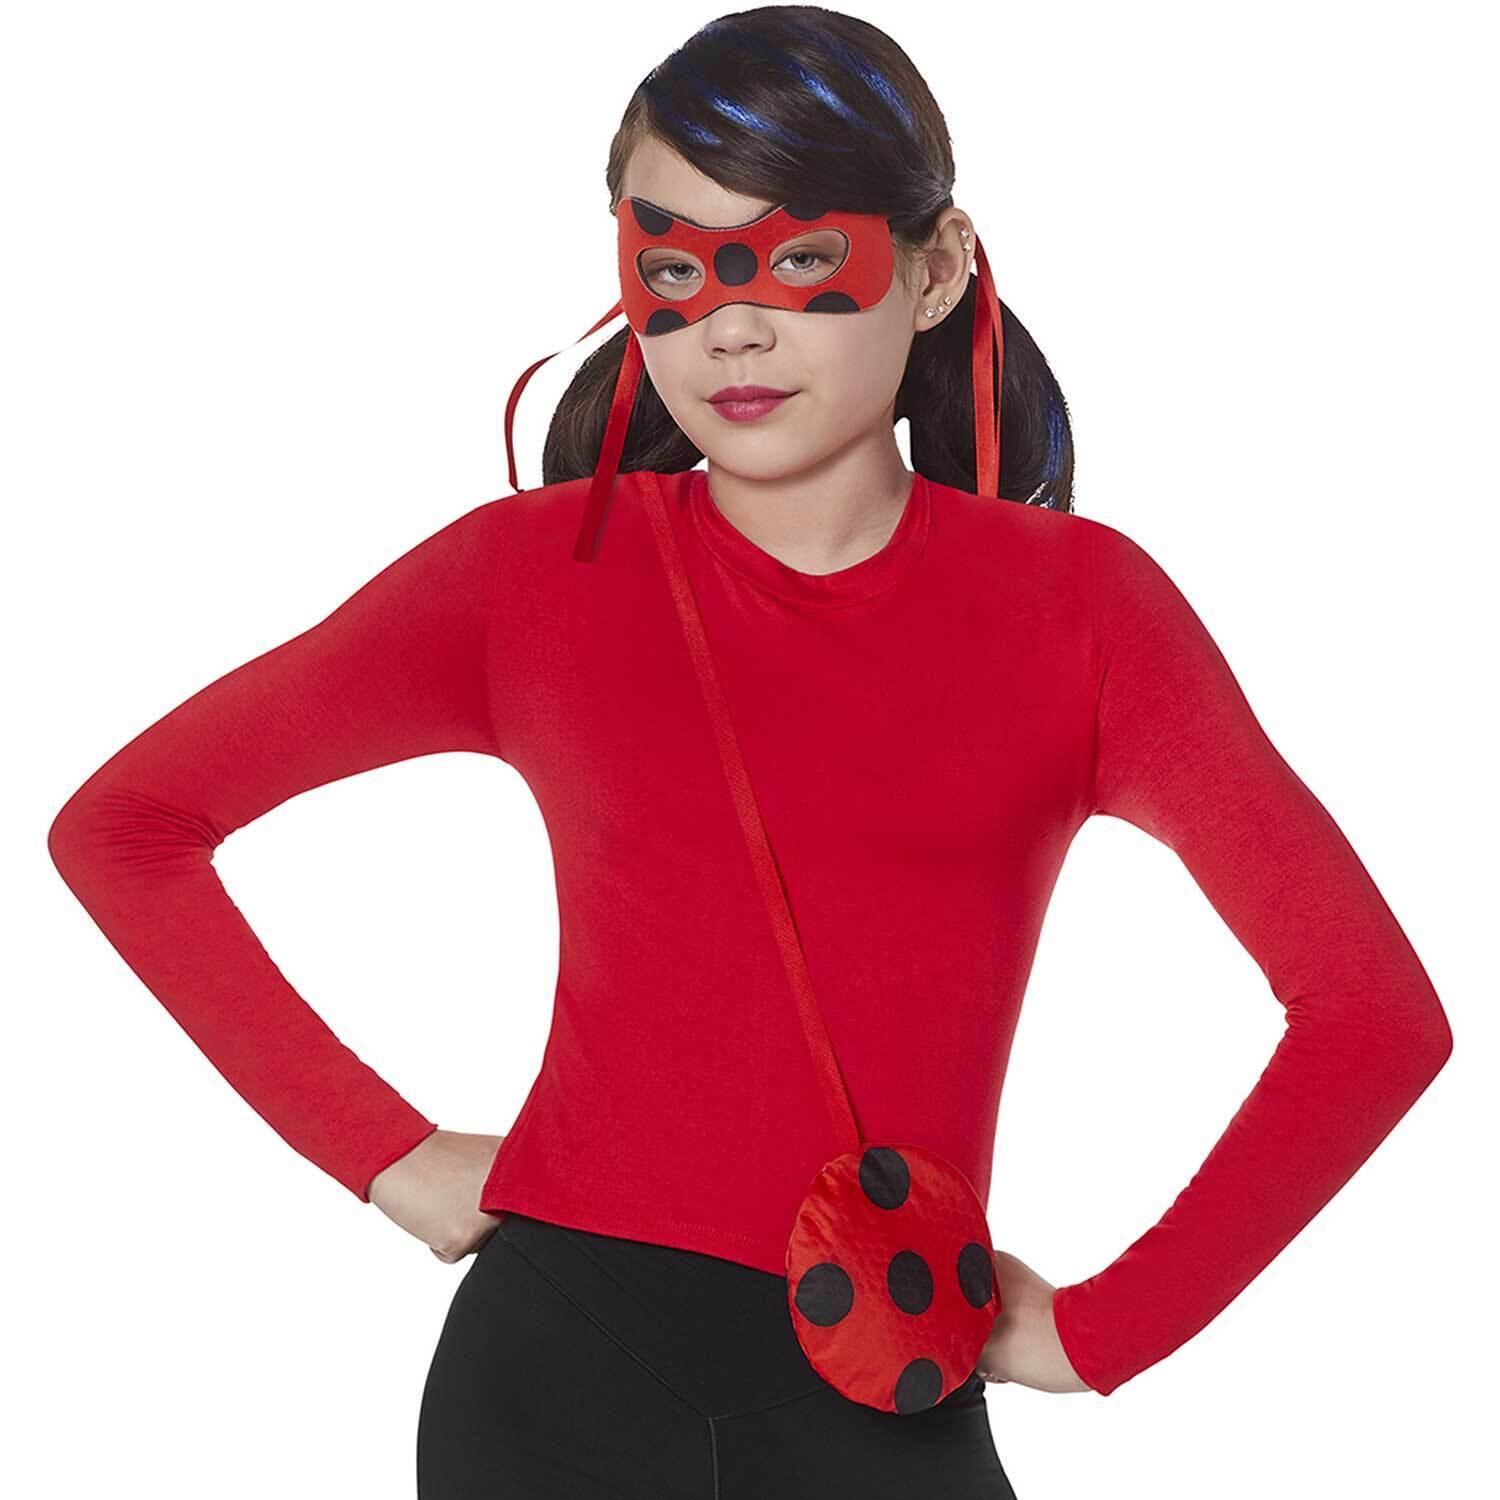 Miraculous Ladybug Child Halloween Costume Kit